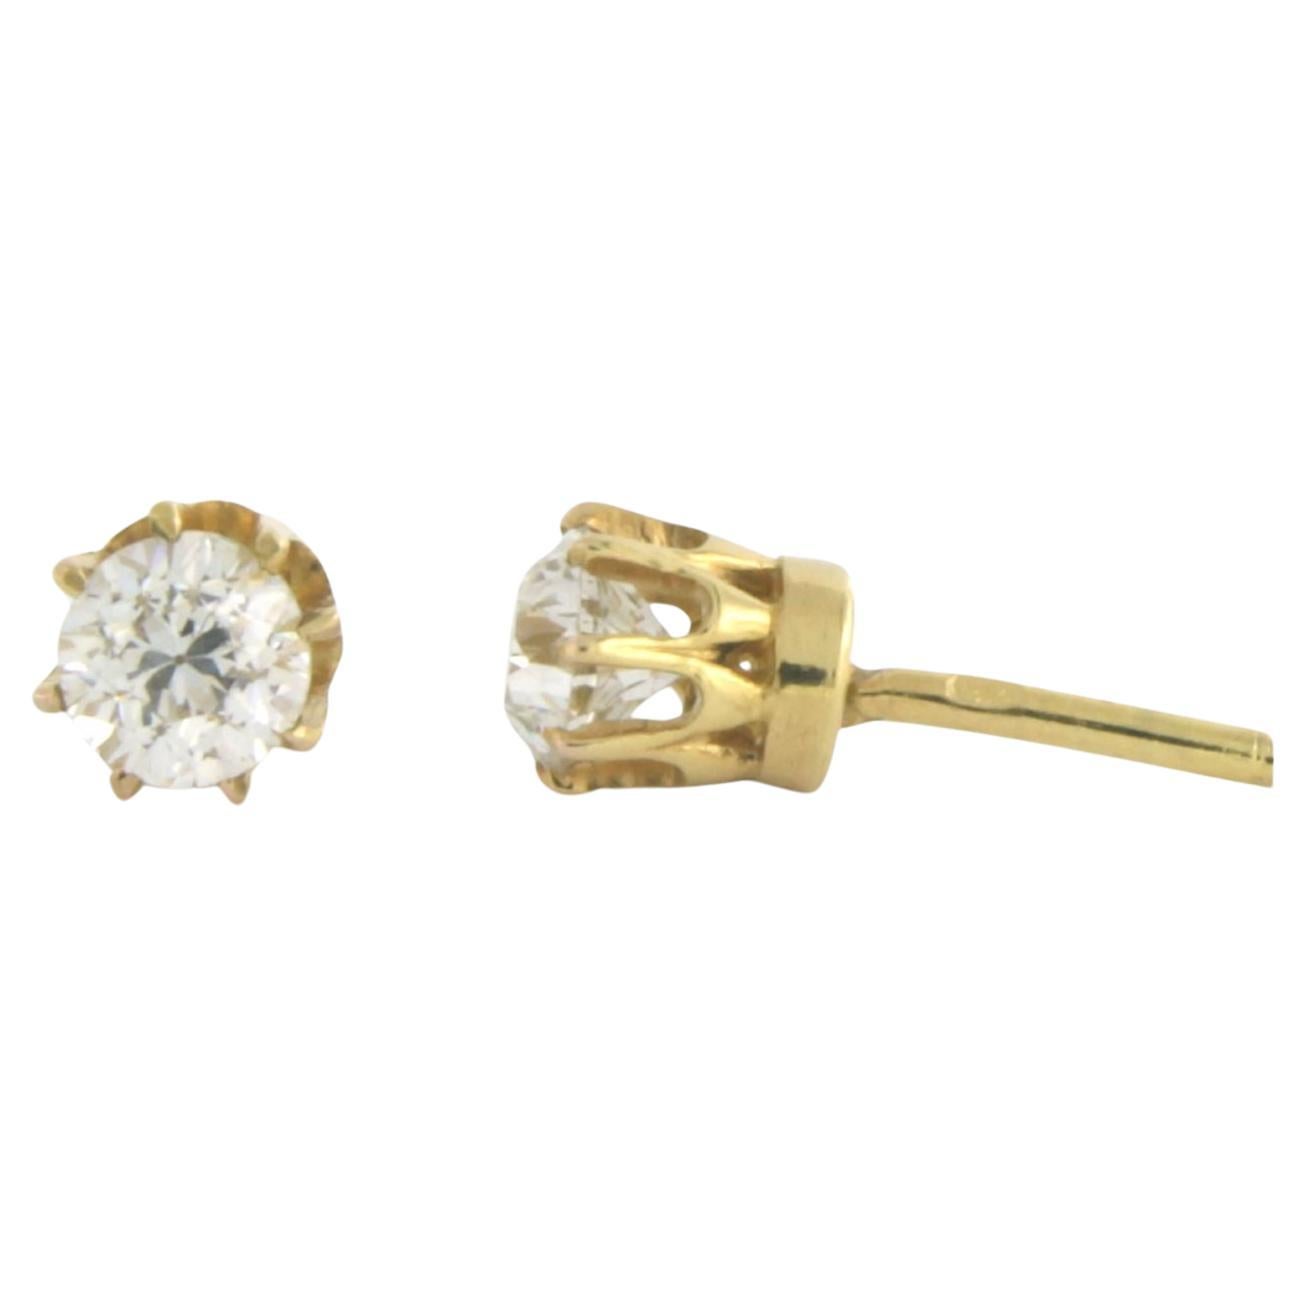 Earrings studs diamonds 14k yellow gold